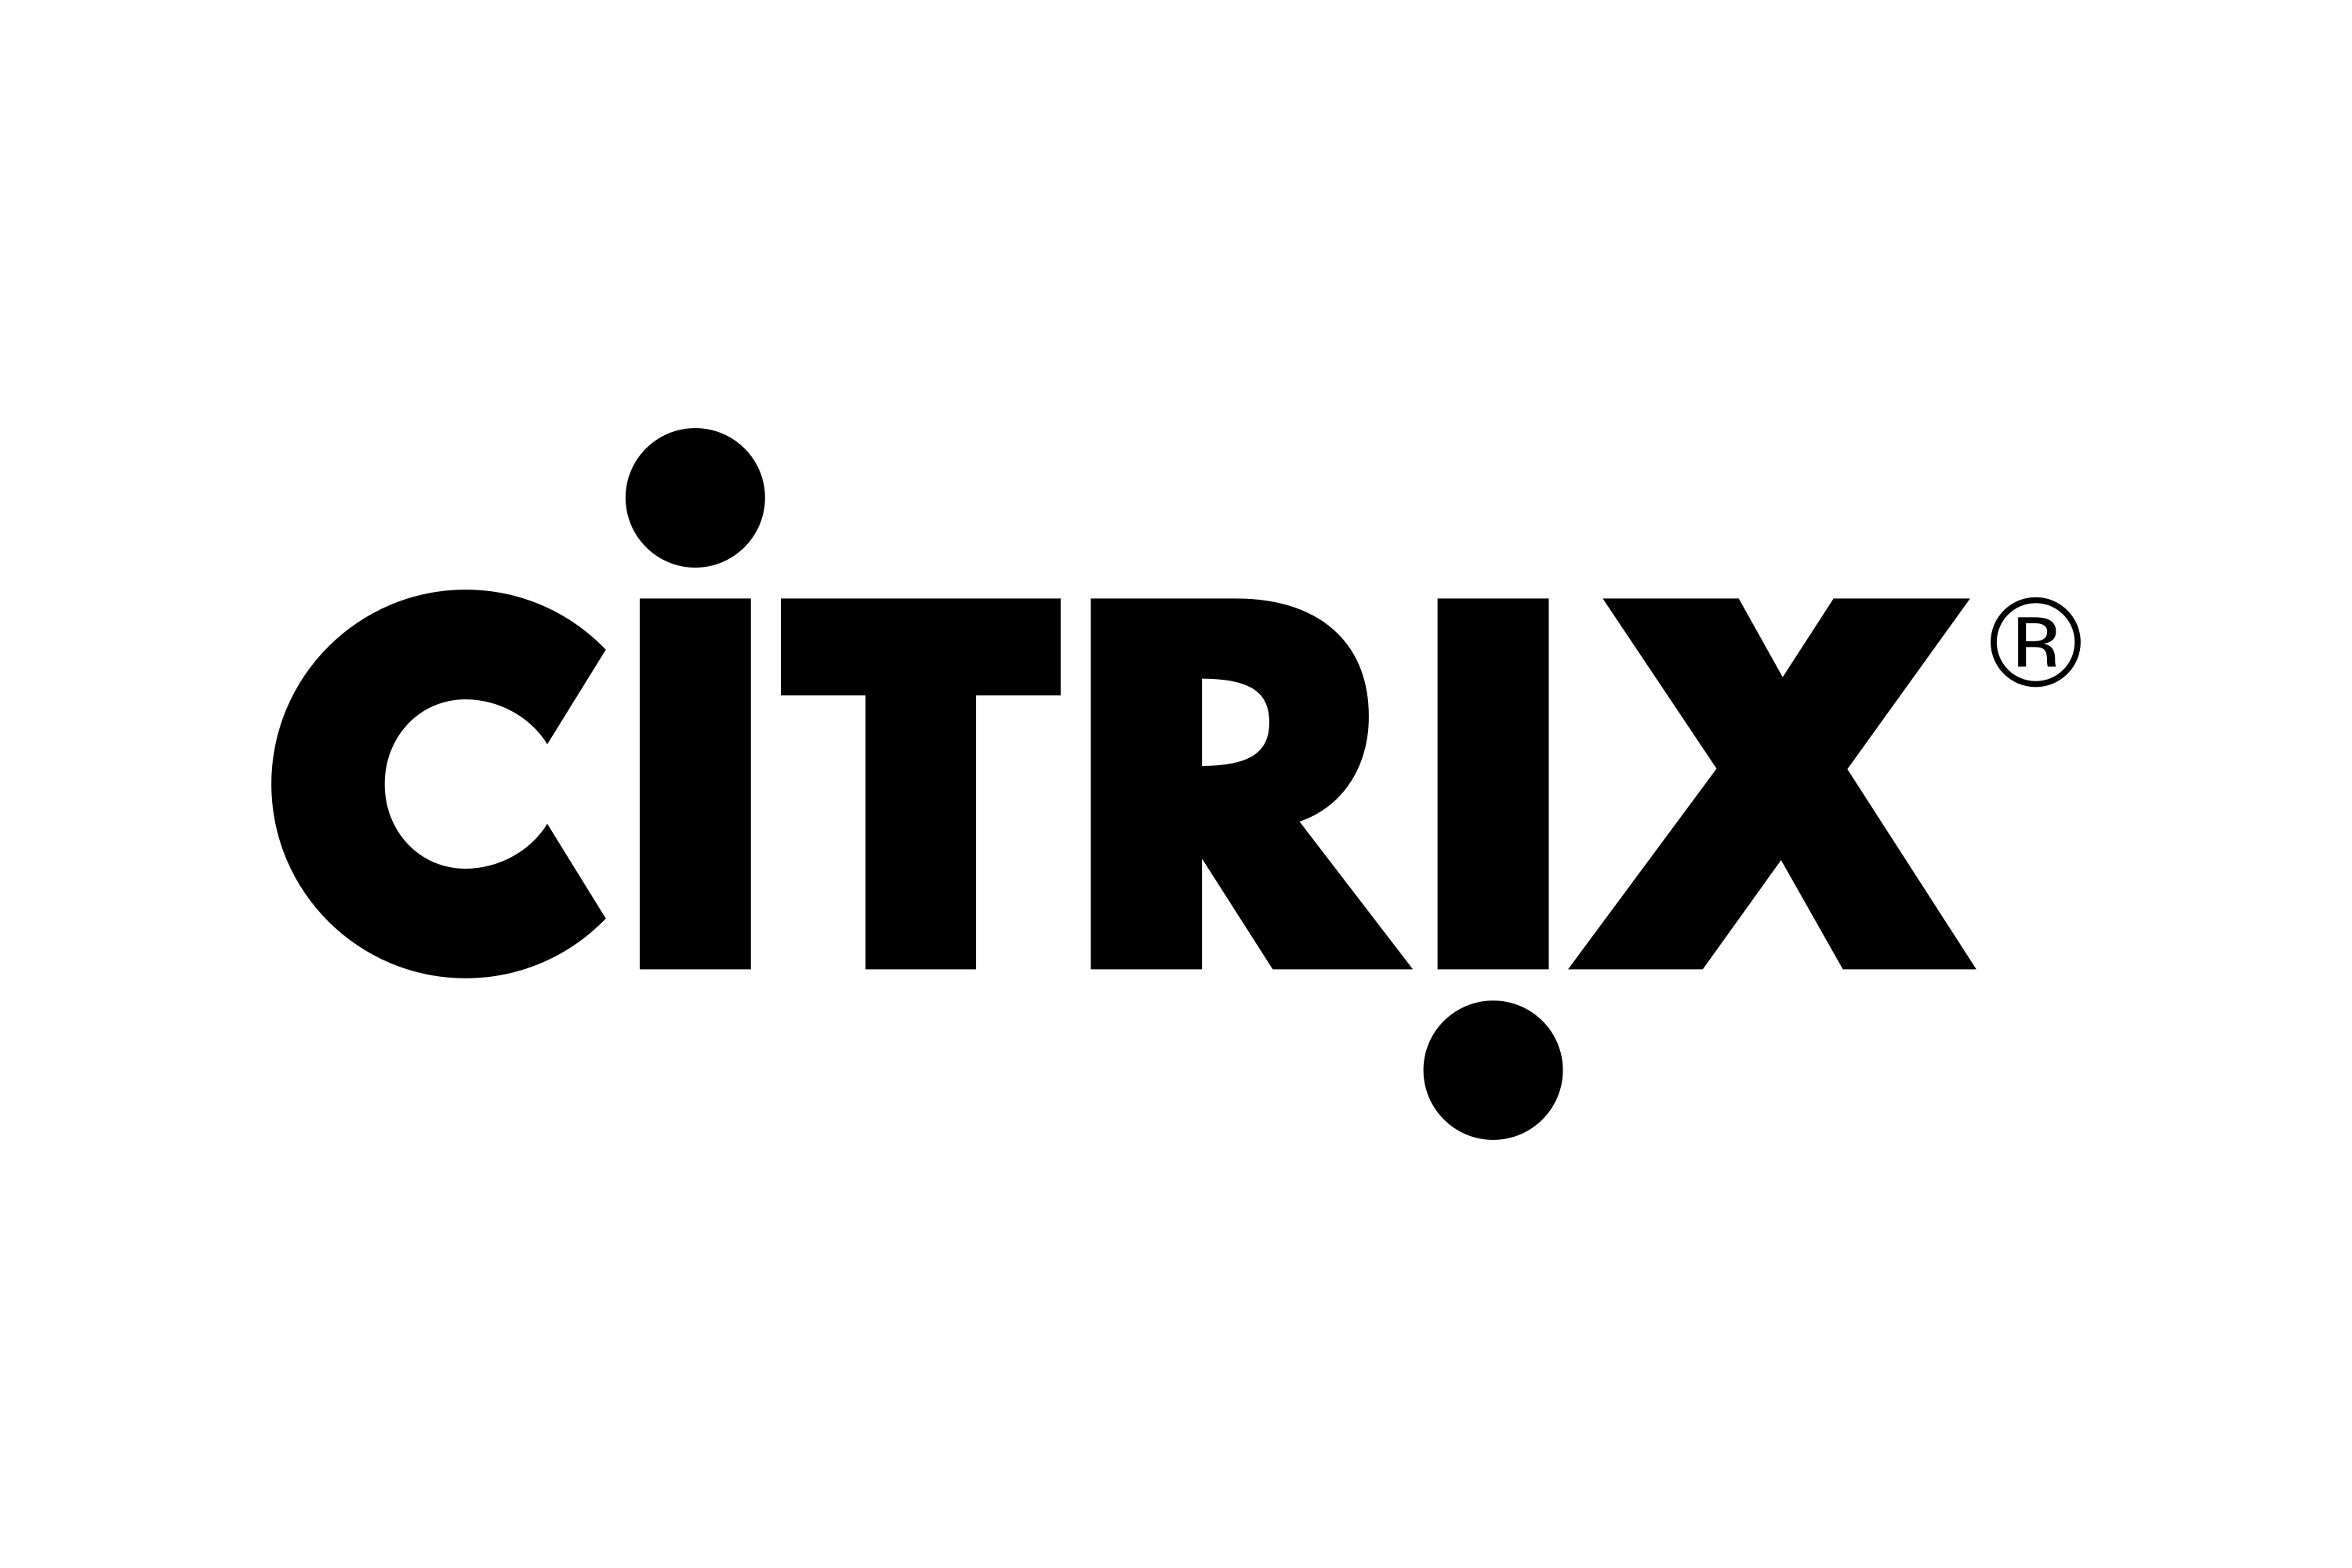 Download Citrix Systems Logo in SVG Vector or PNG File Format - Logo.wine